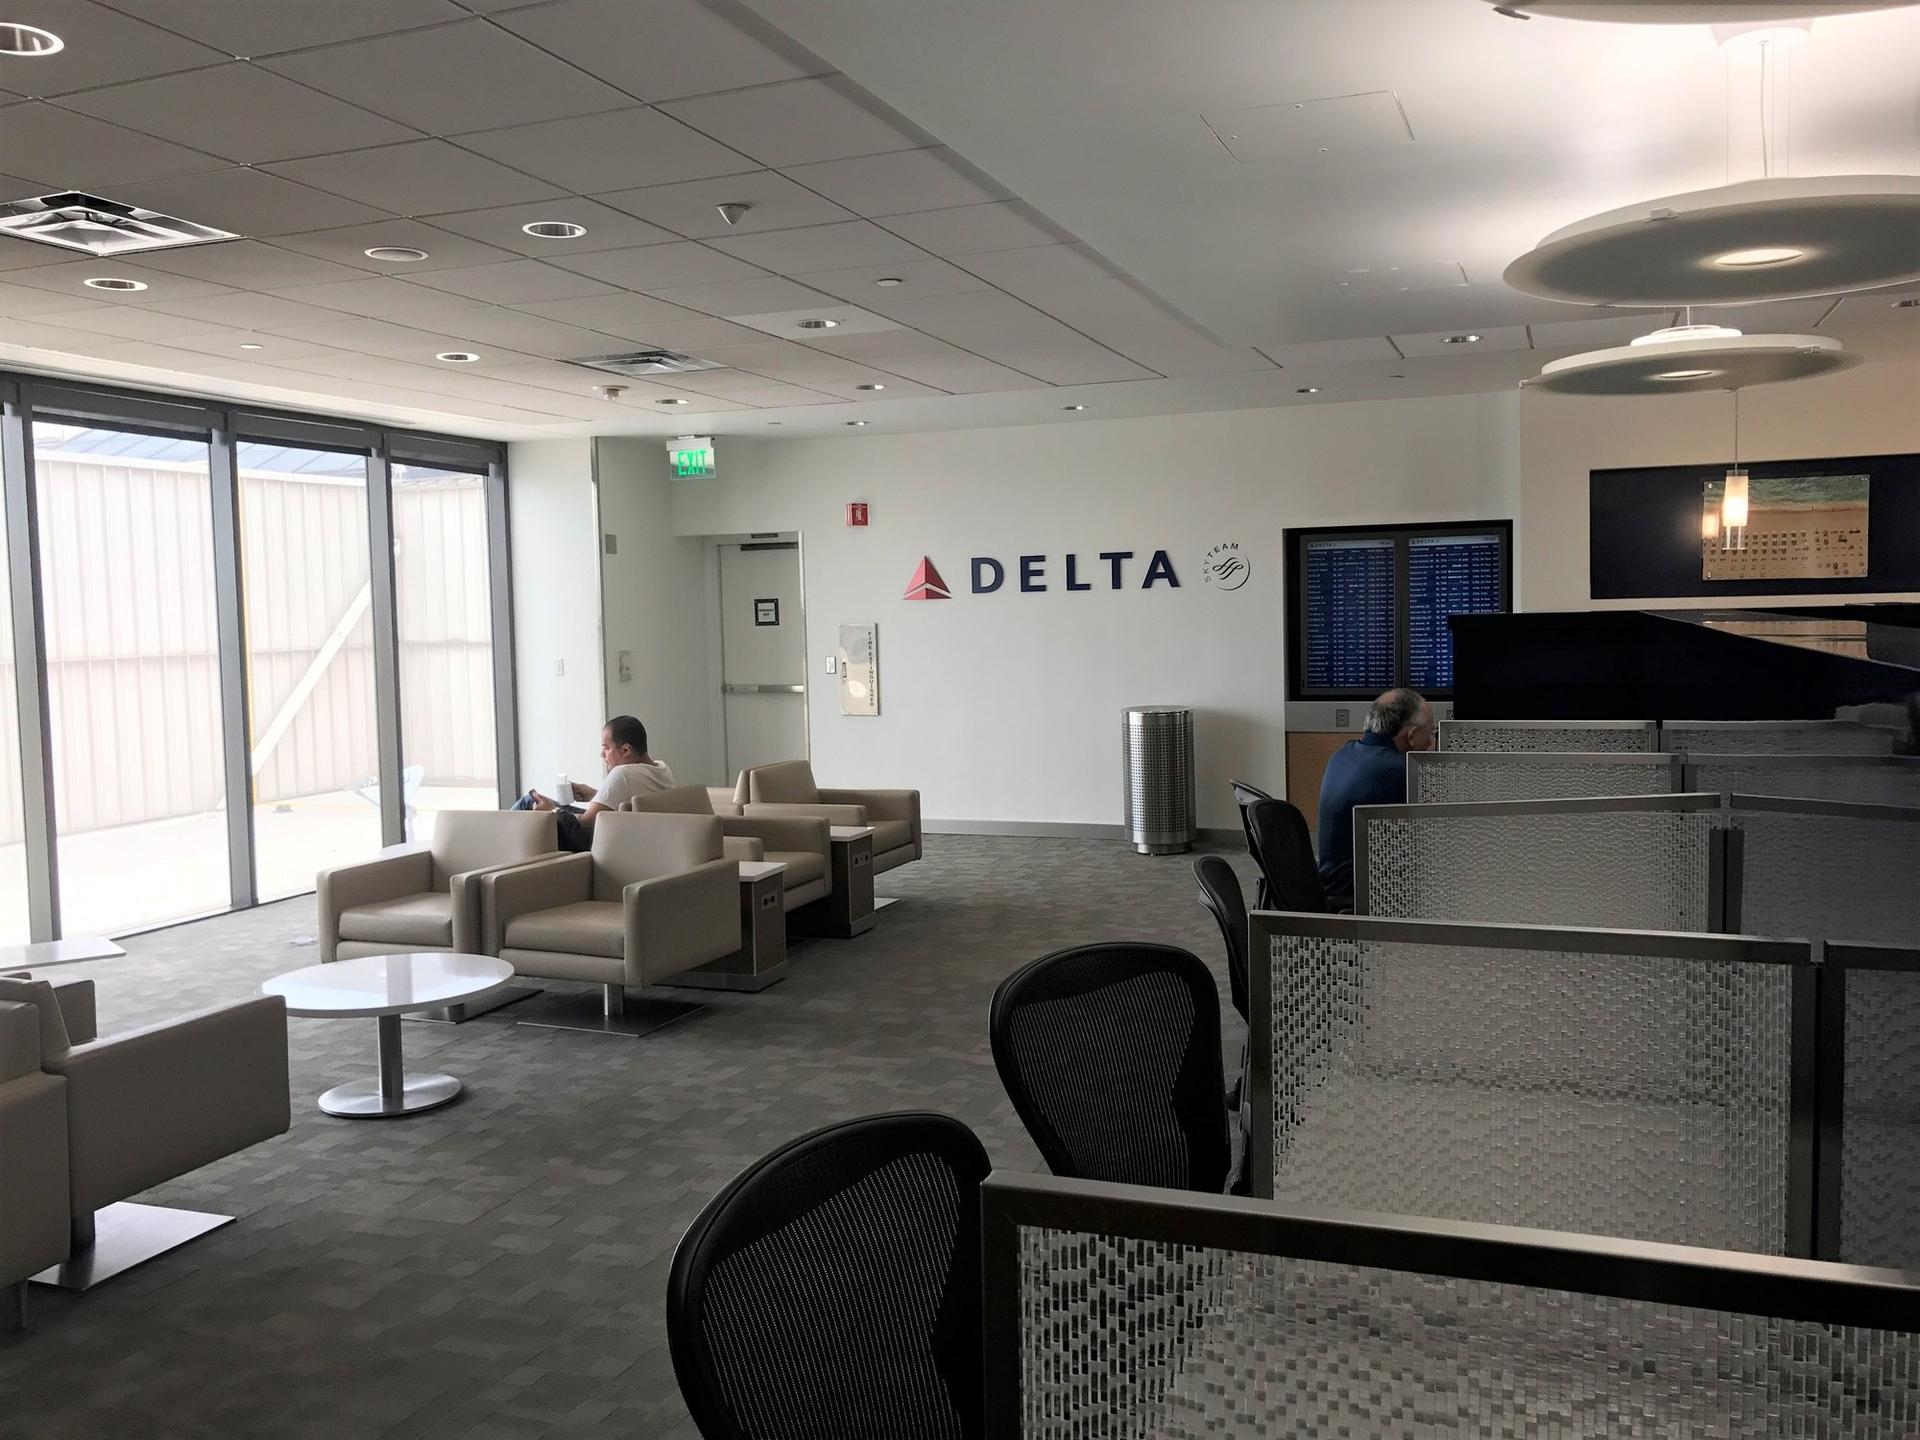 Delta Air Lines Delta Sky Club (Gate A17) image 9 of 21